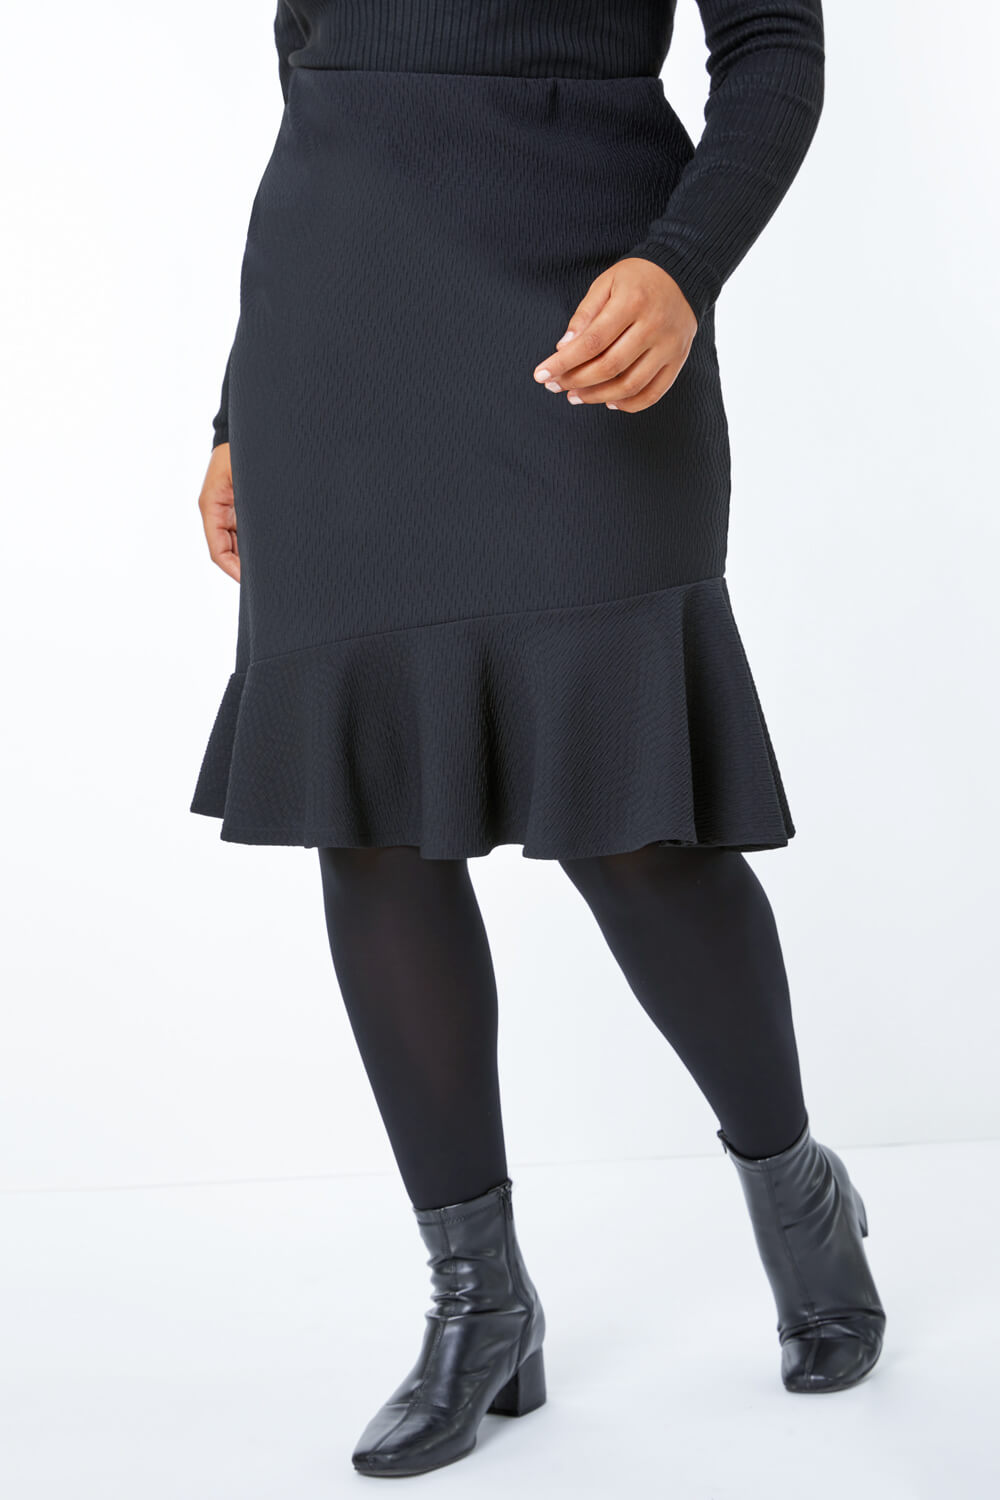 Black Curve Frill Hem Skirt, Image 2 of 5